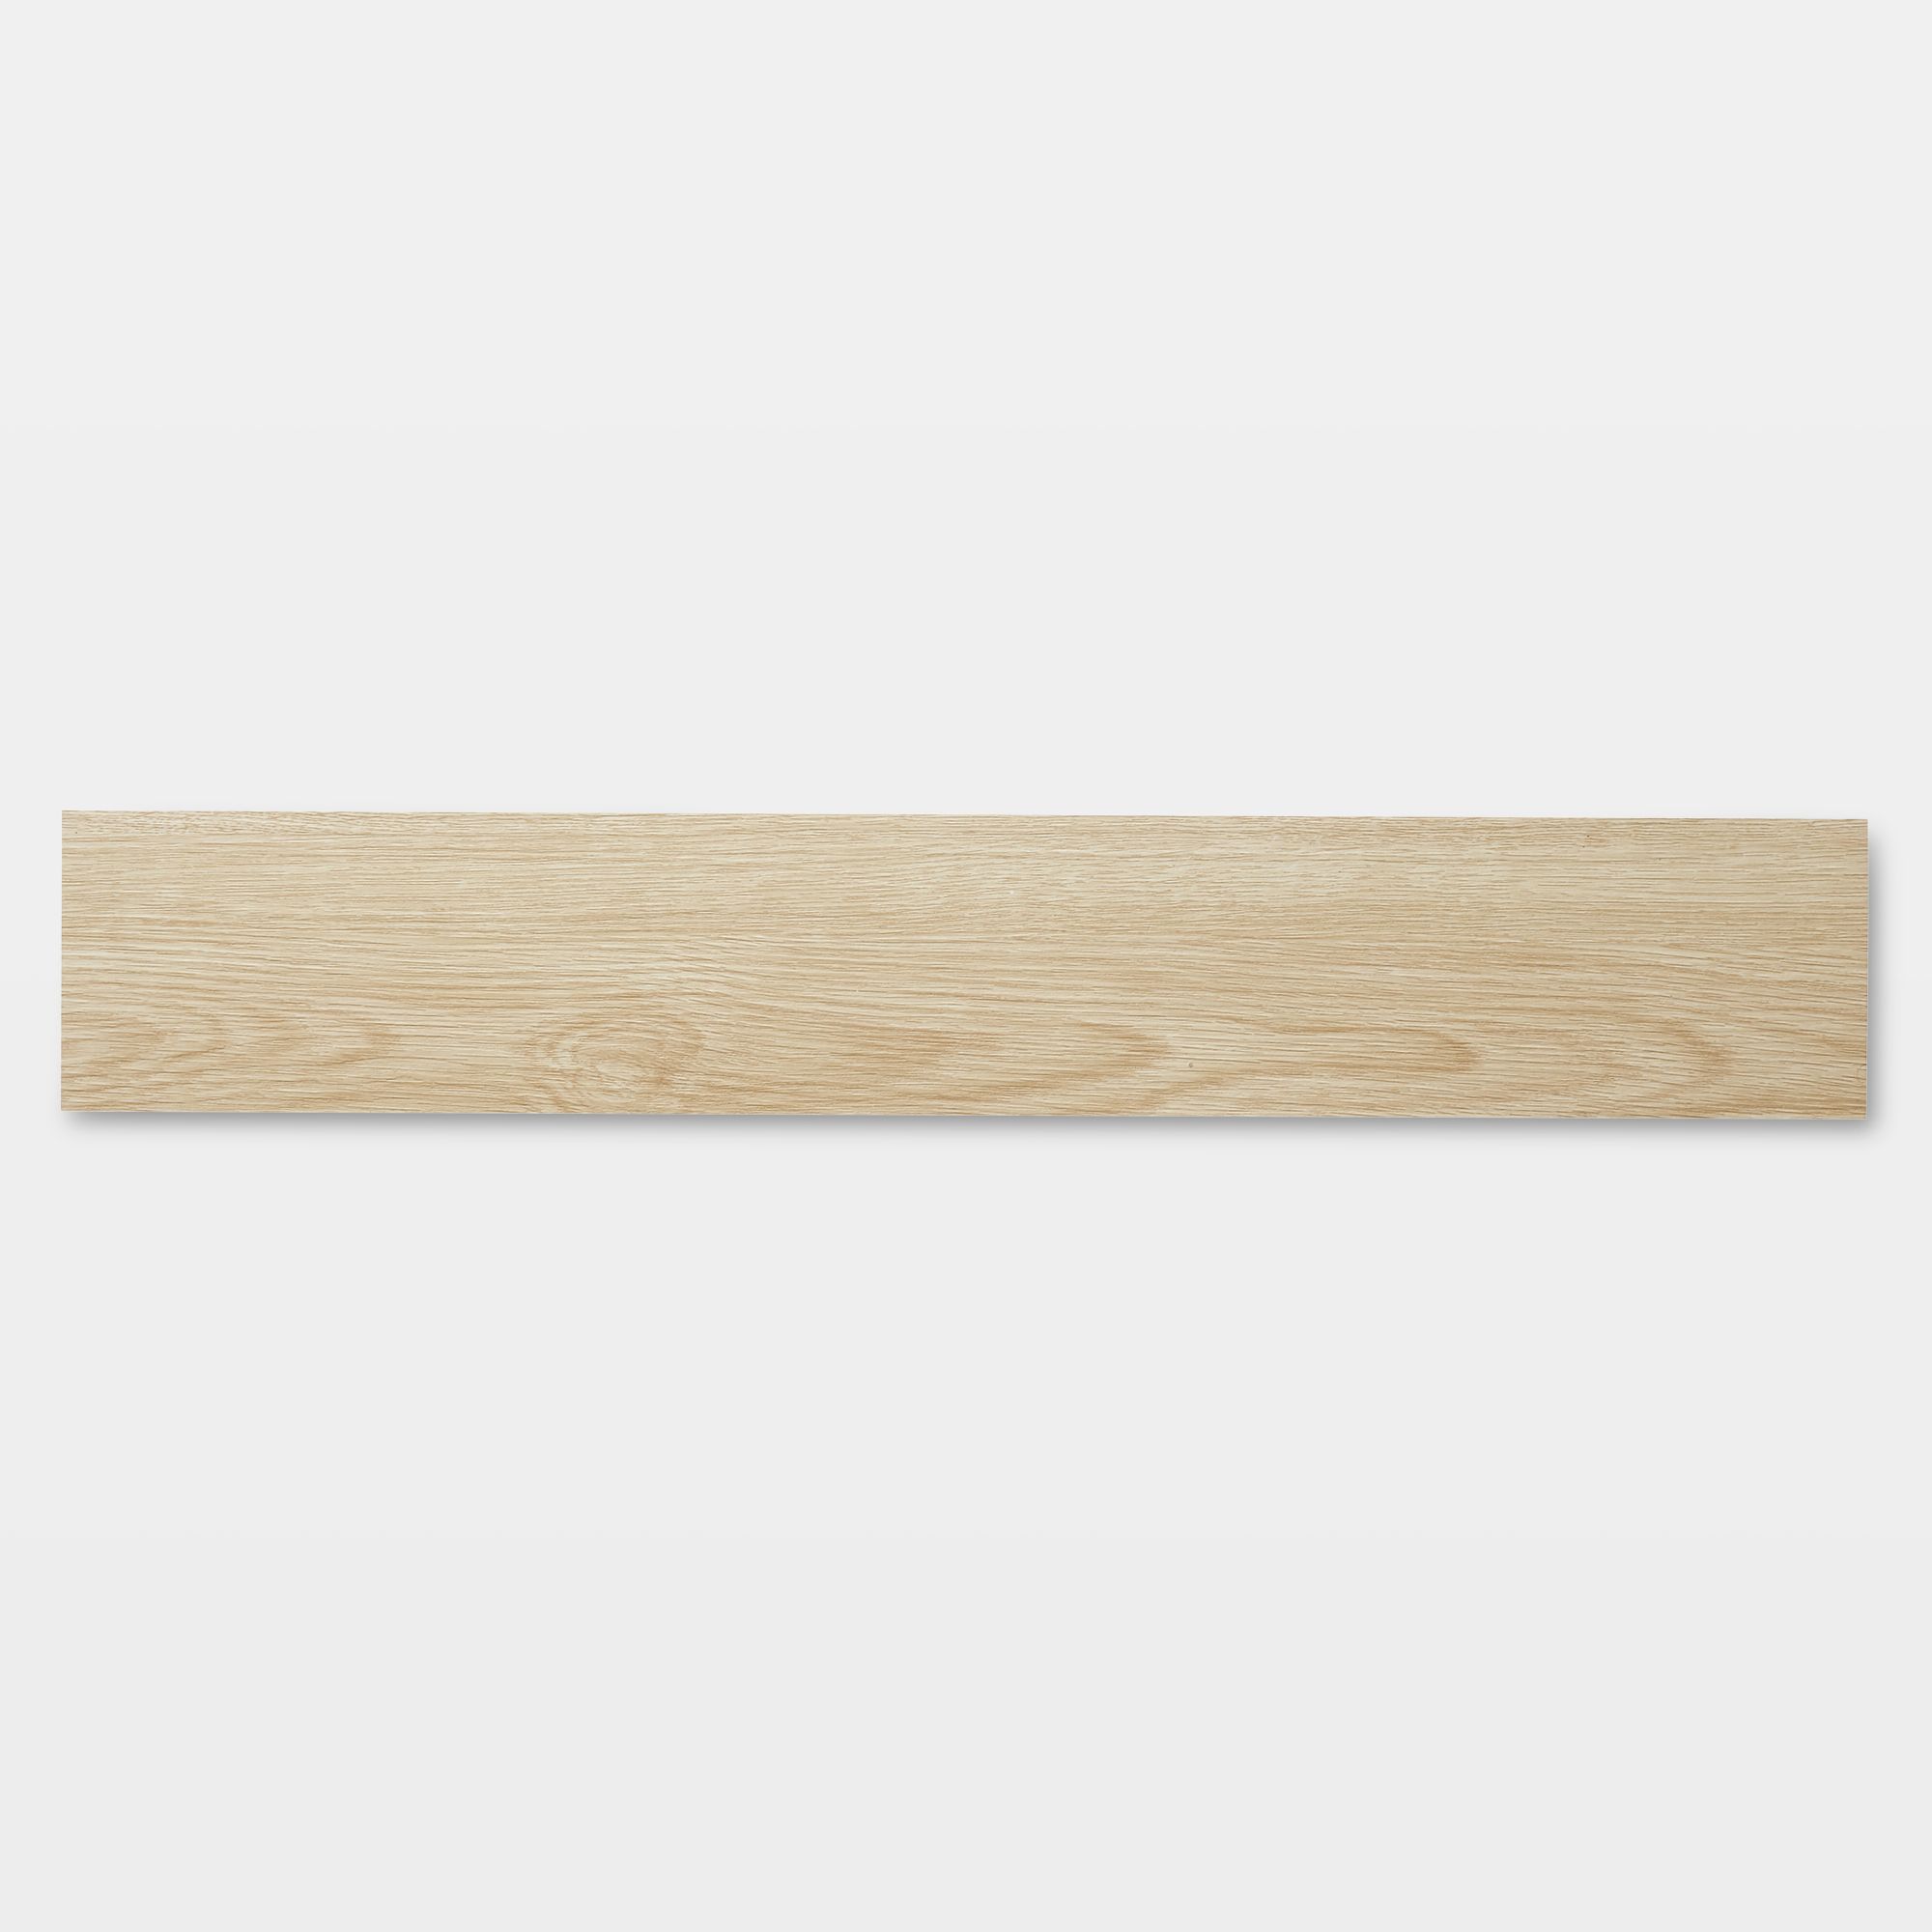 GoodHome Poprock Natural Wood planks Wood effect Self-adhesive Vinyl plank, Pack of 20